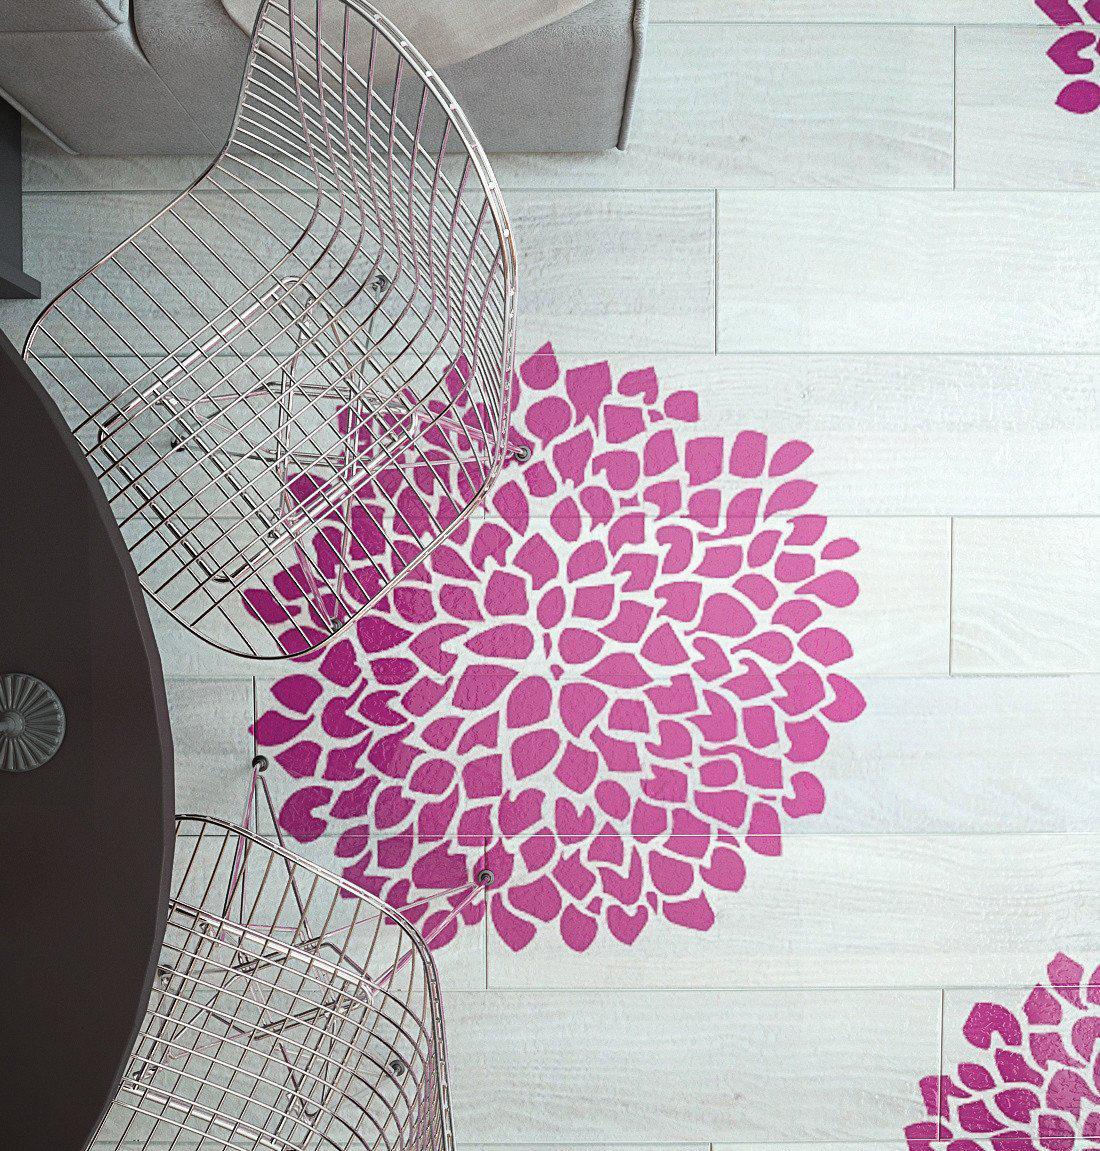 Wall stencil - Flower Stencil For Walls - Reusable Floral Stencil –  StencilsLAB Wall Stencils